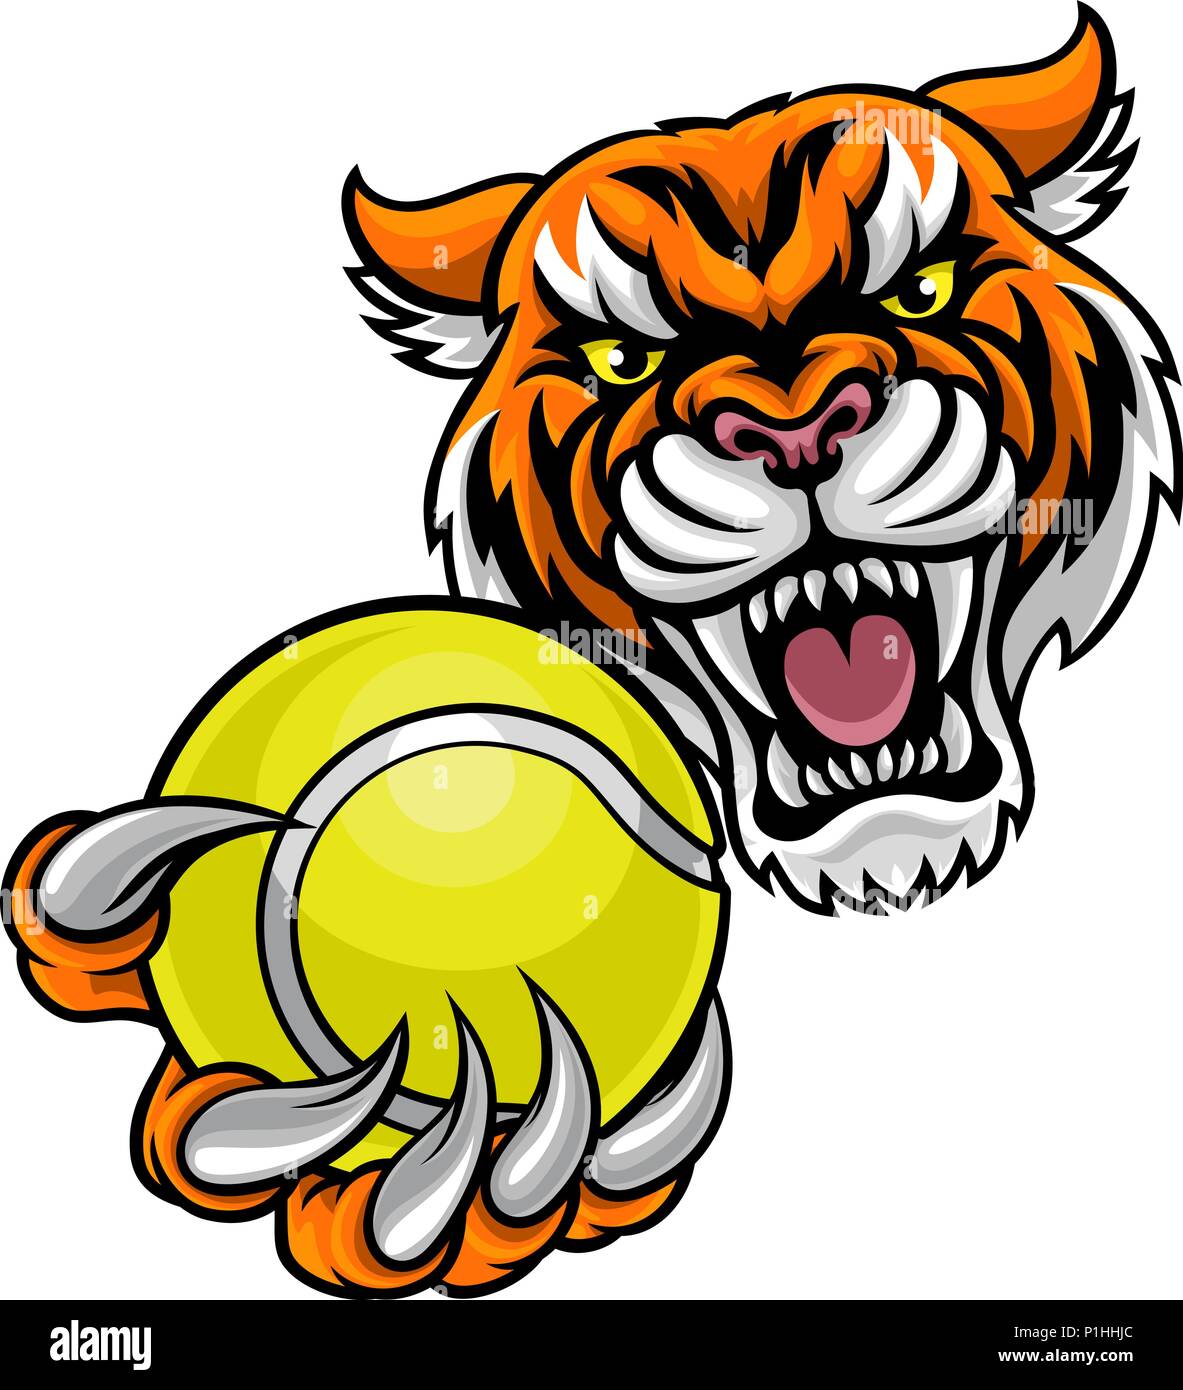 Tiger Holding Tennis Ball Mascot Stock Vector Image & Art - Alamy